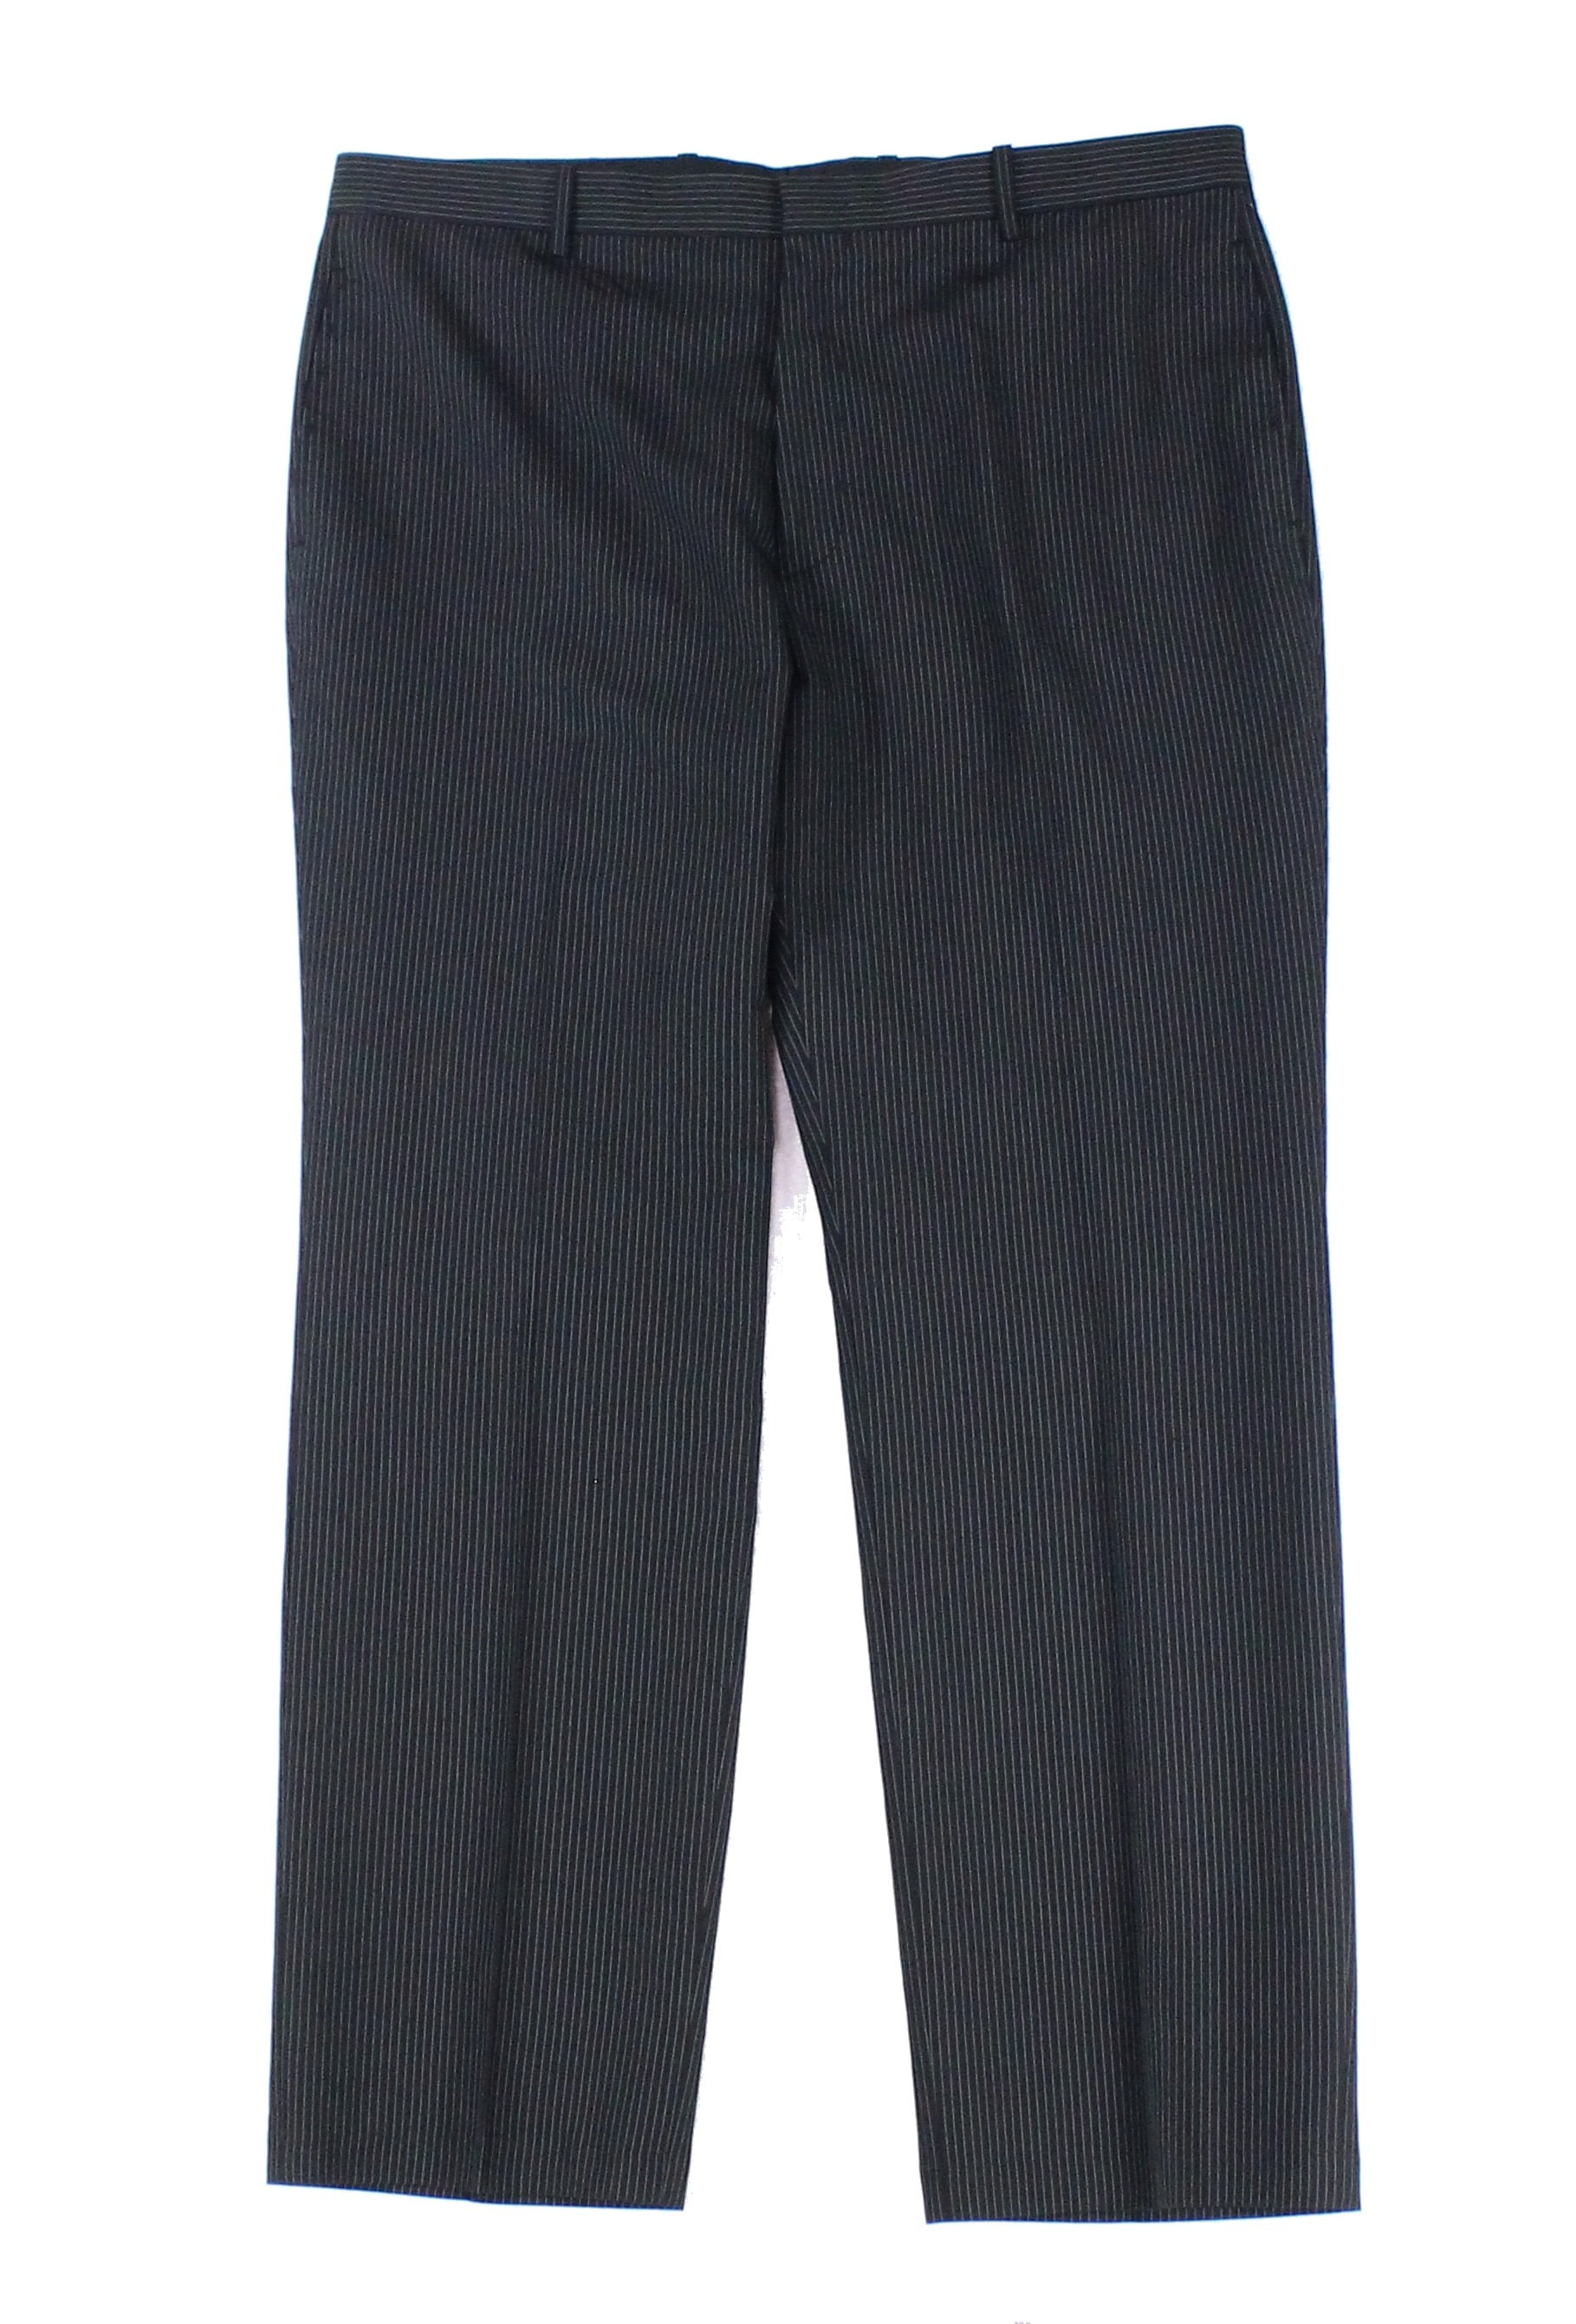 INC NEW Black Mens Size 32X32 Reg Fit Dress Pinstripe Flat Front Pants ...